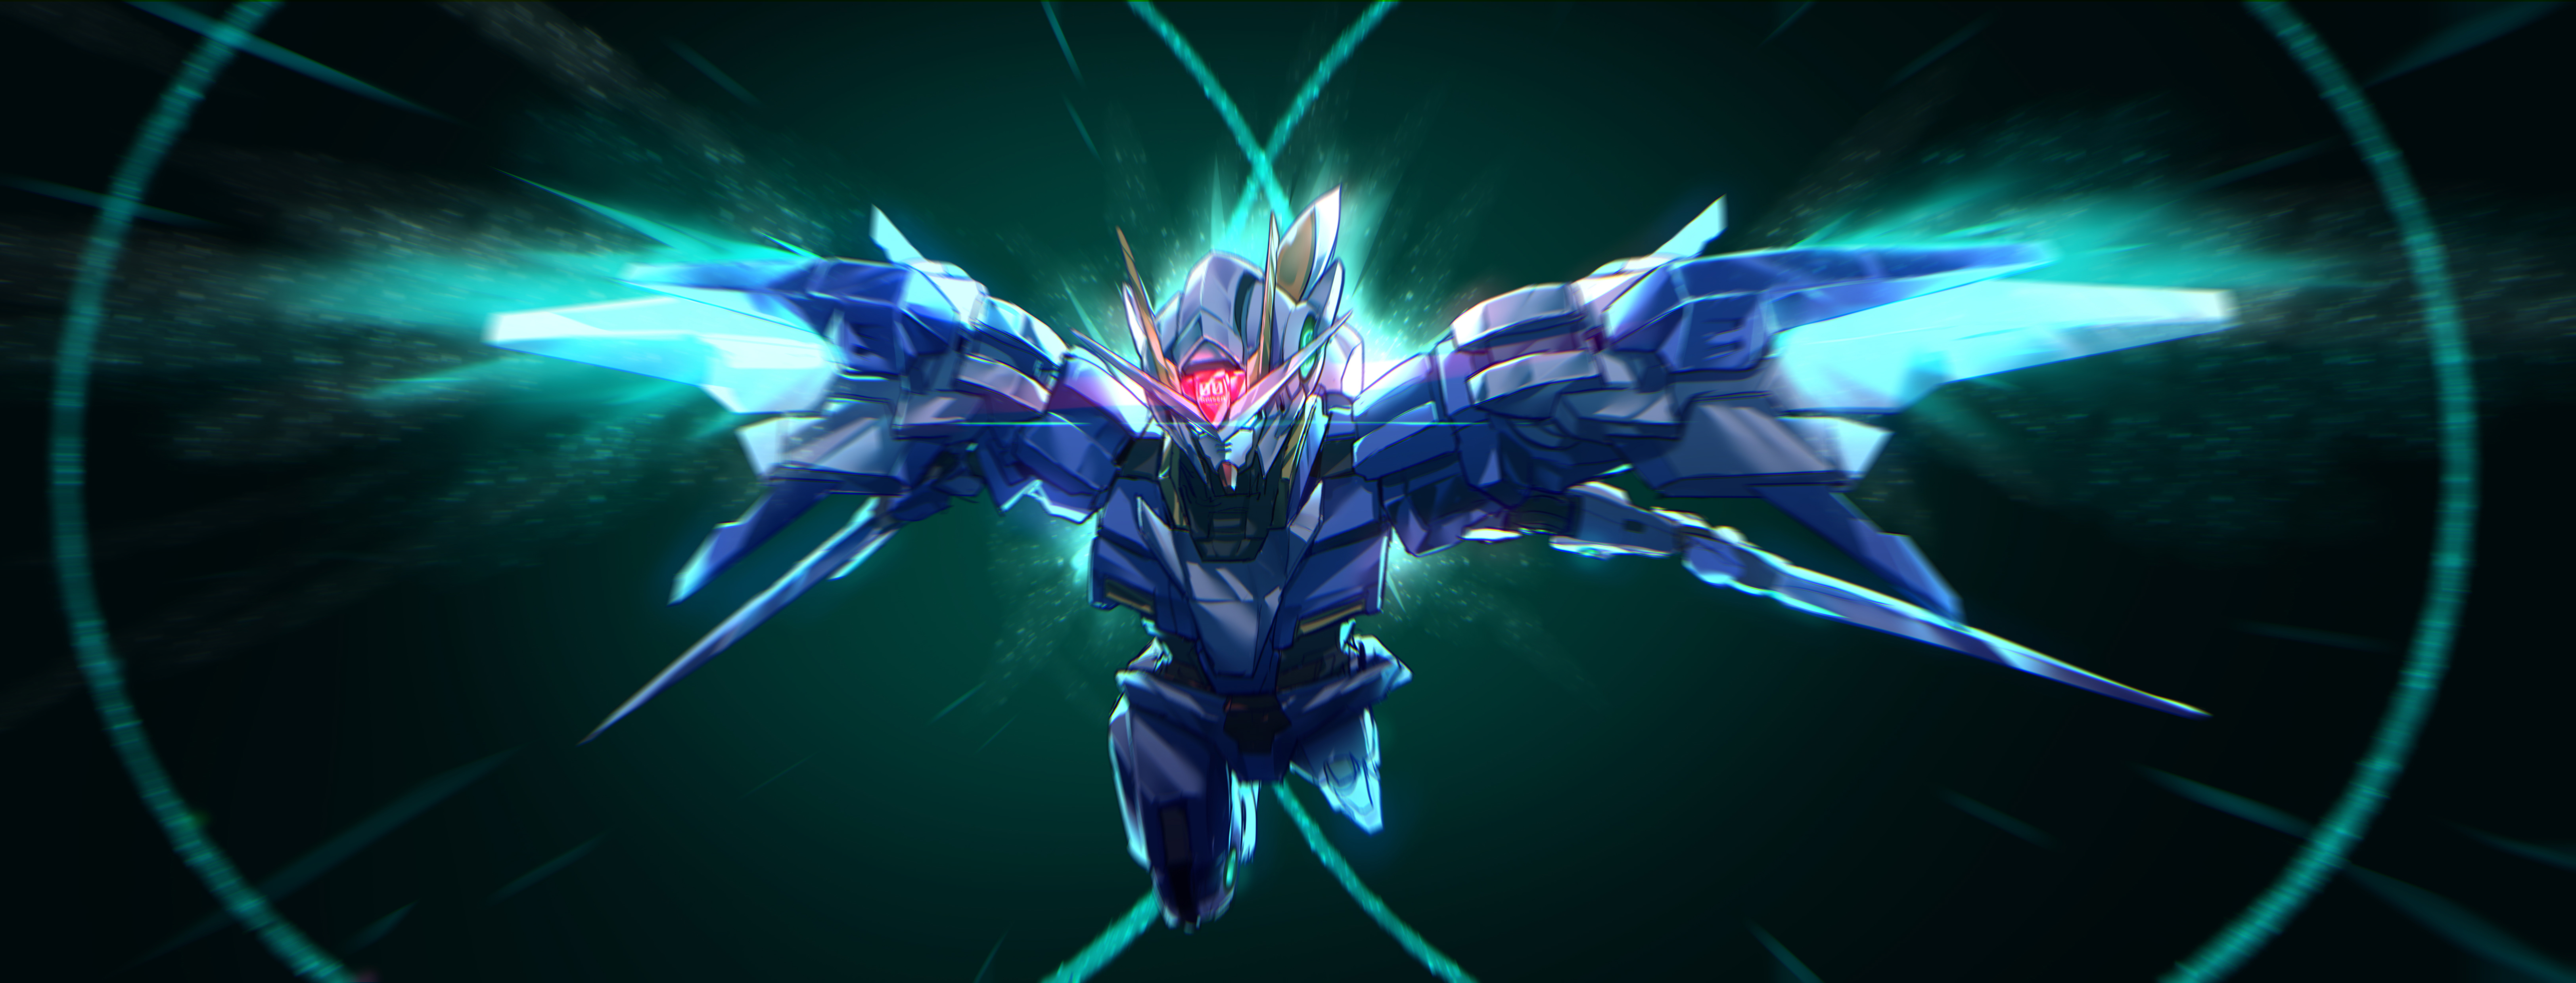 Anime 6496x2480 anime mechs Gundam 00 Raiser Mobile Suit Gundam 00 Super Robot Taisen artwork digital art fan art